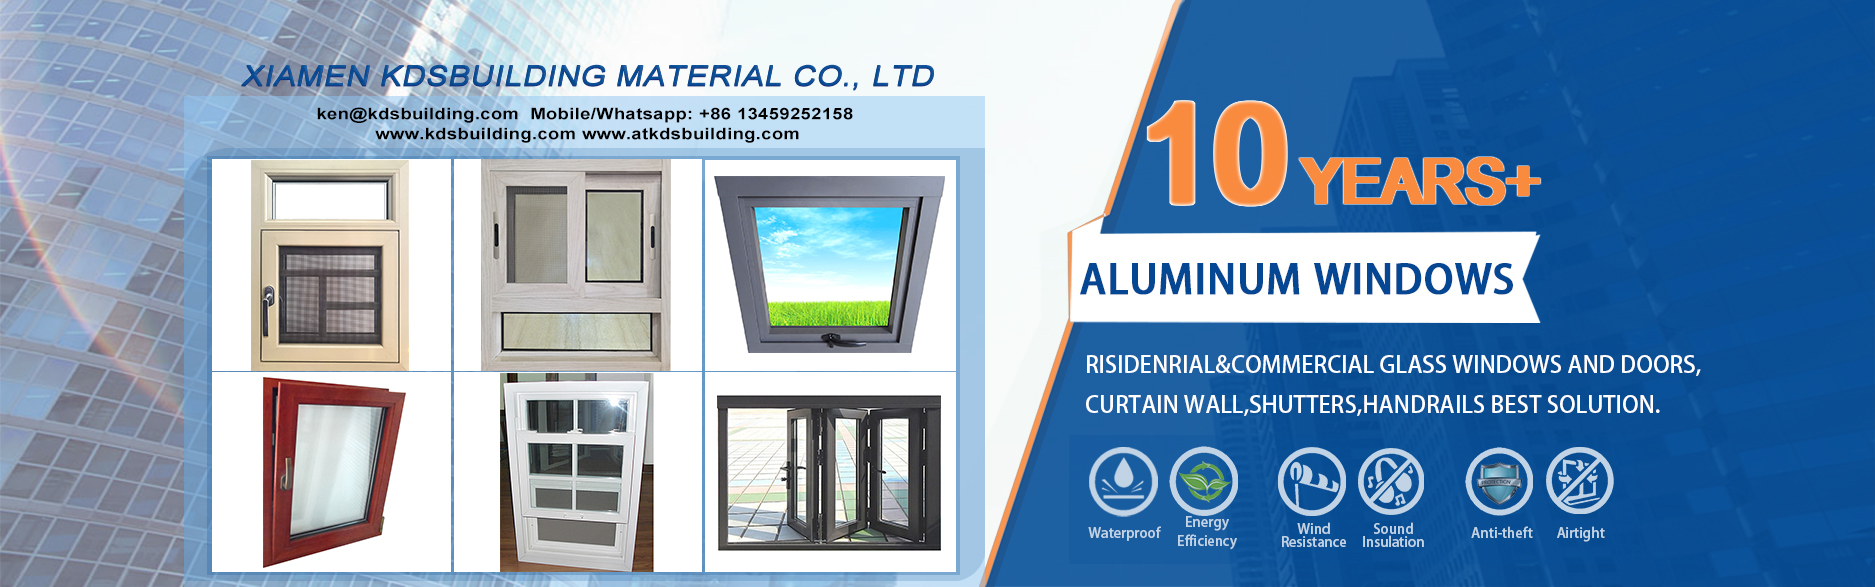 XIAMEN KDSBUILDING MATERIAL CO.,LTD-aluminum window supplier